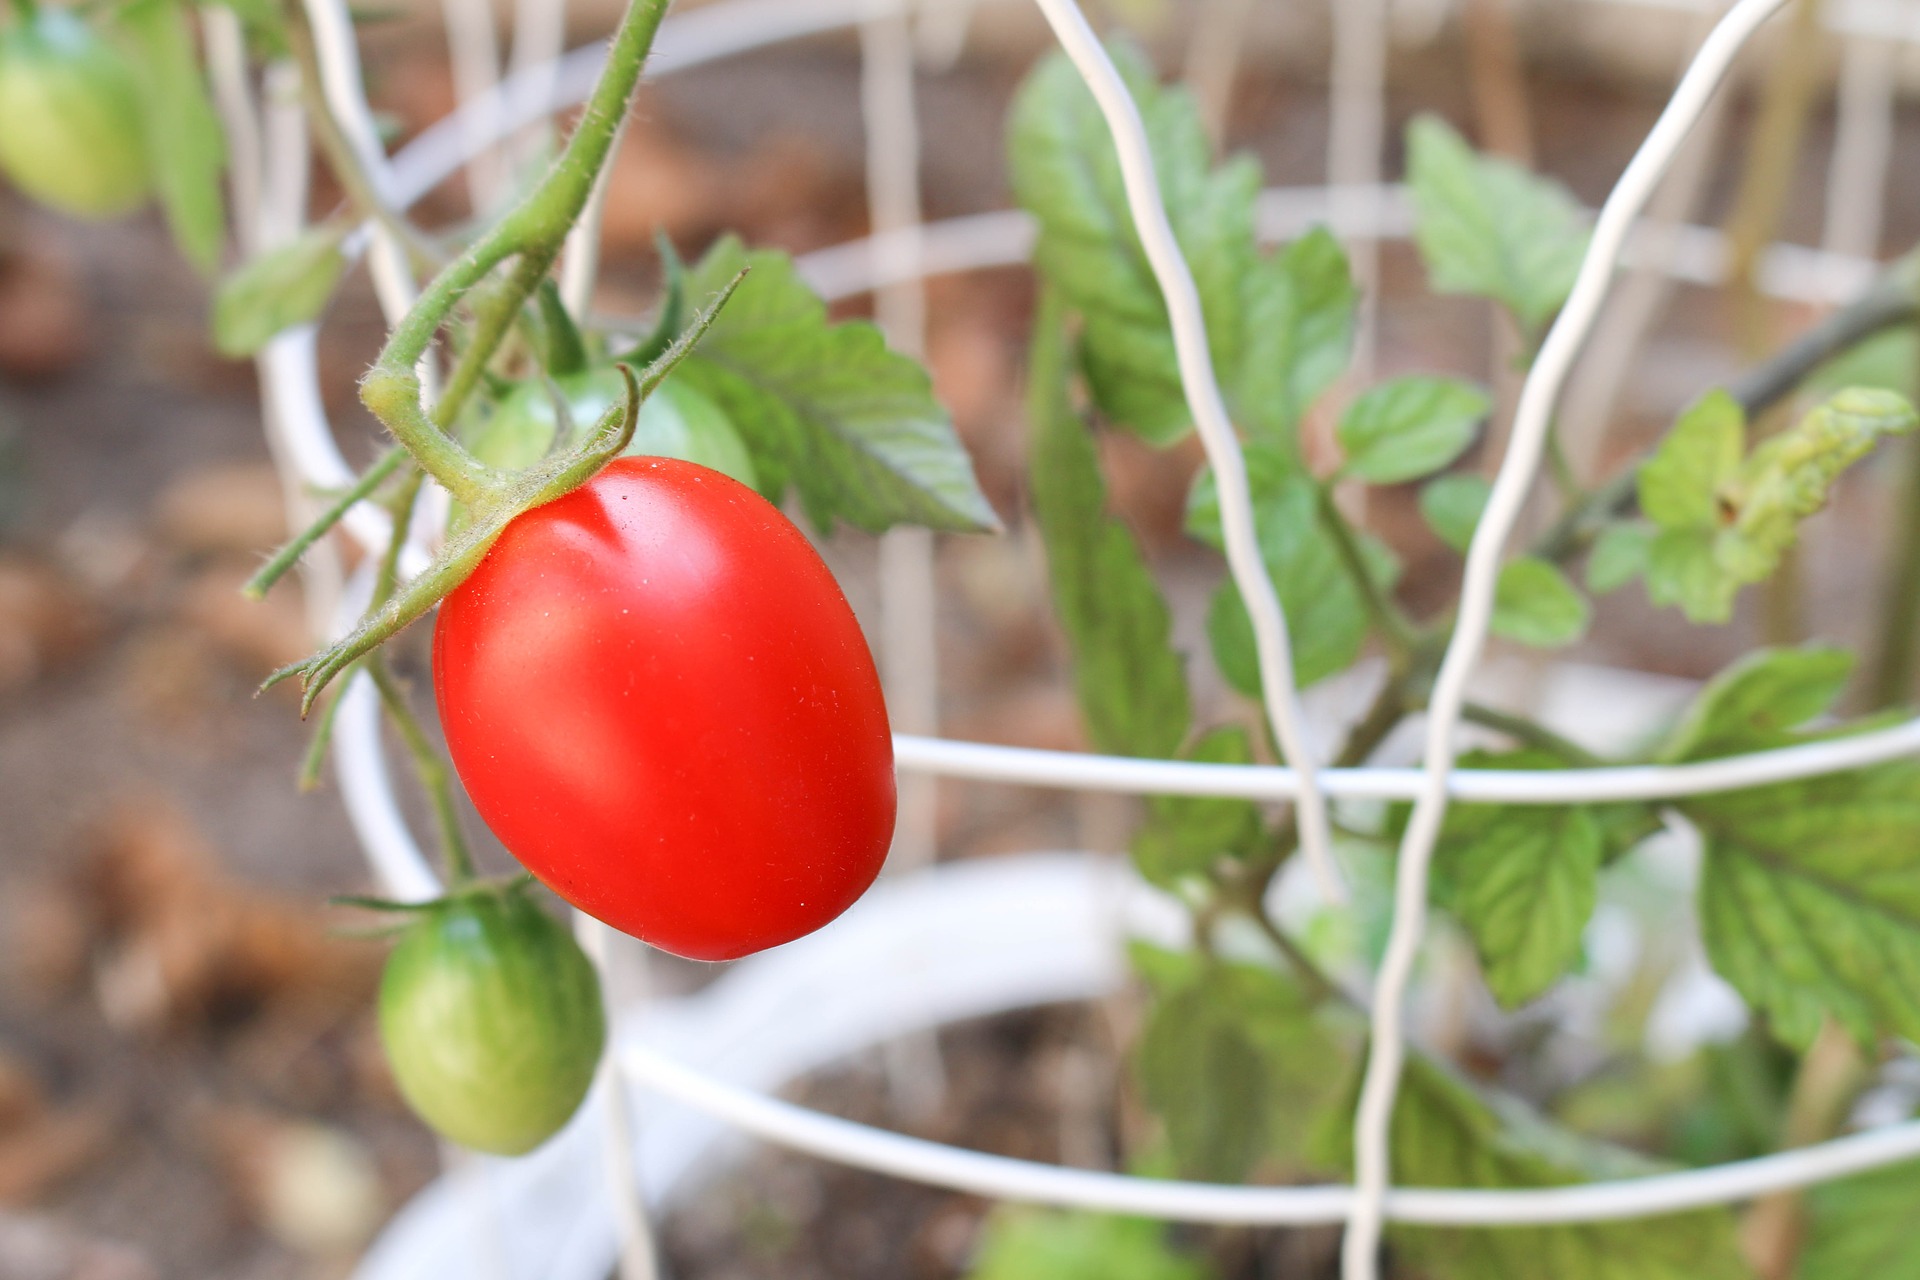 planta de tomate en maceta